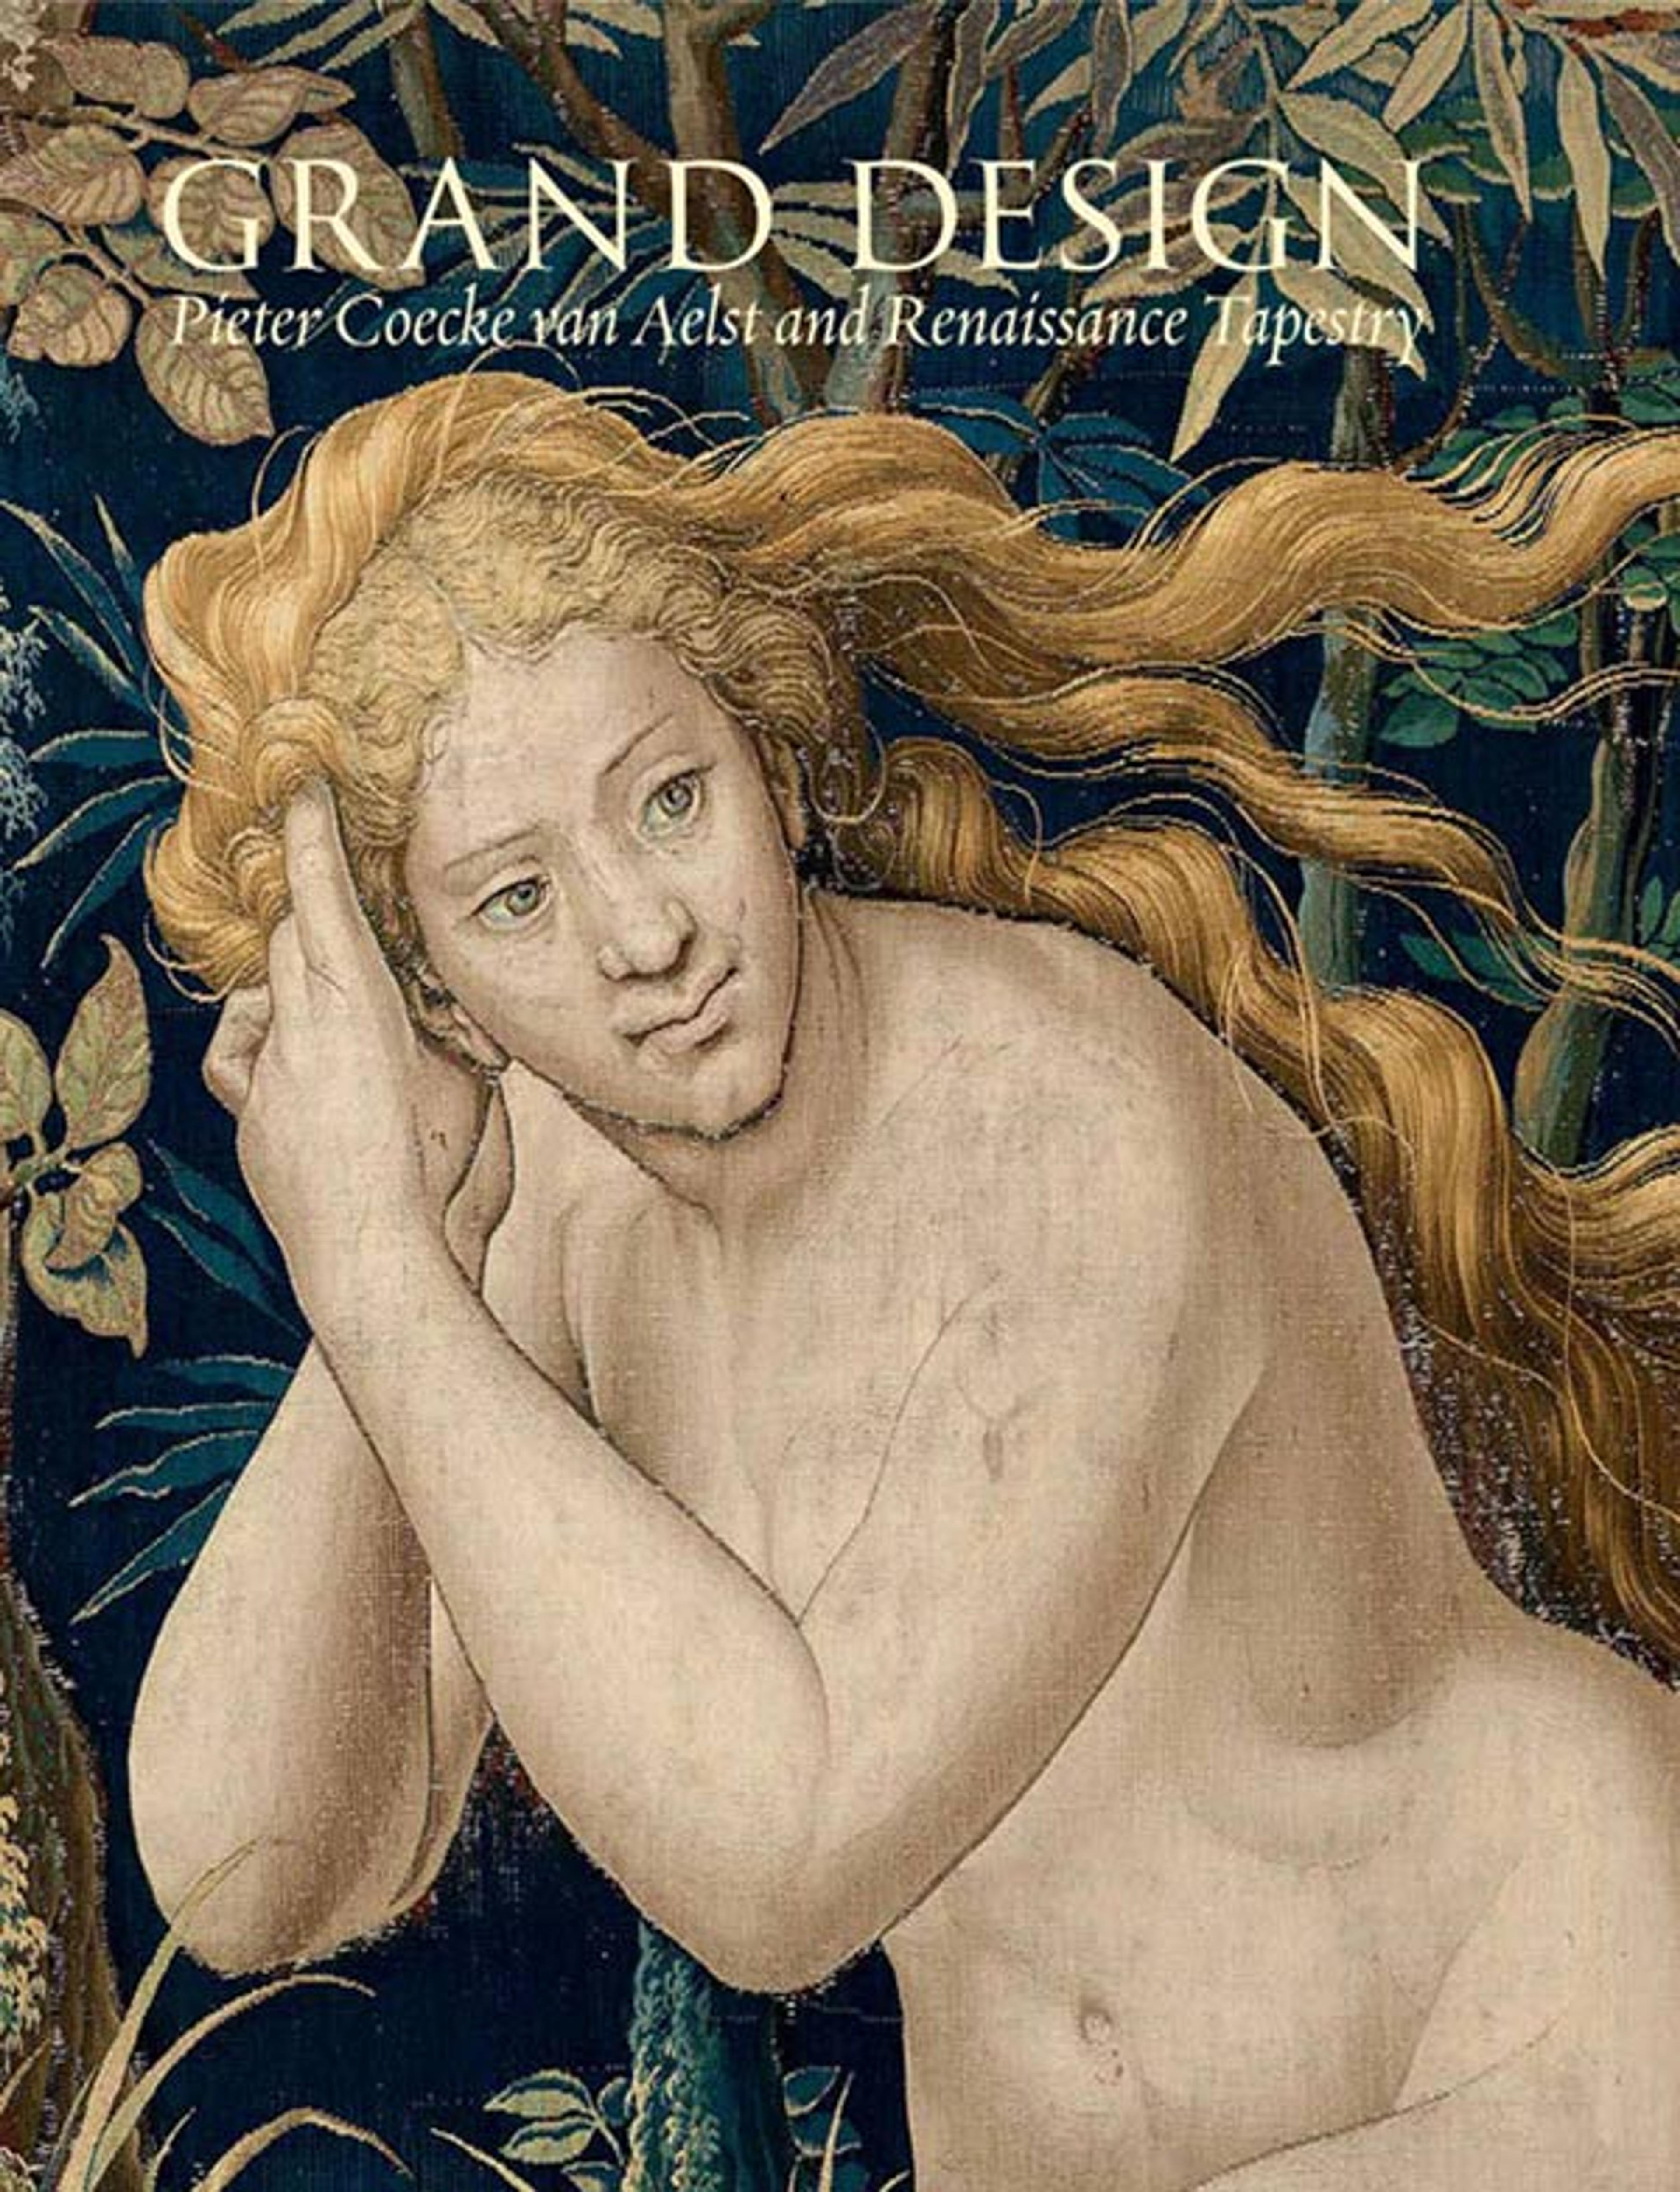 Exhibition catalogue, Grand Design: Pieter Coecke van Aelst and Renaissance Tapestry